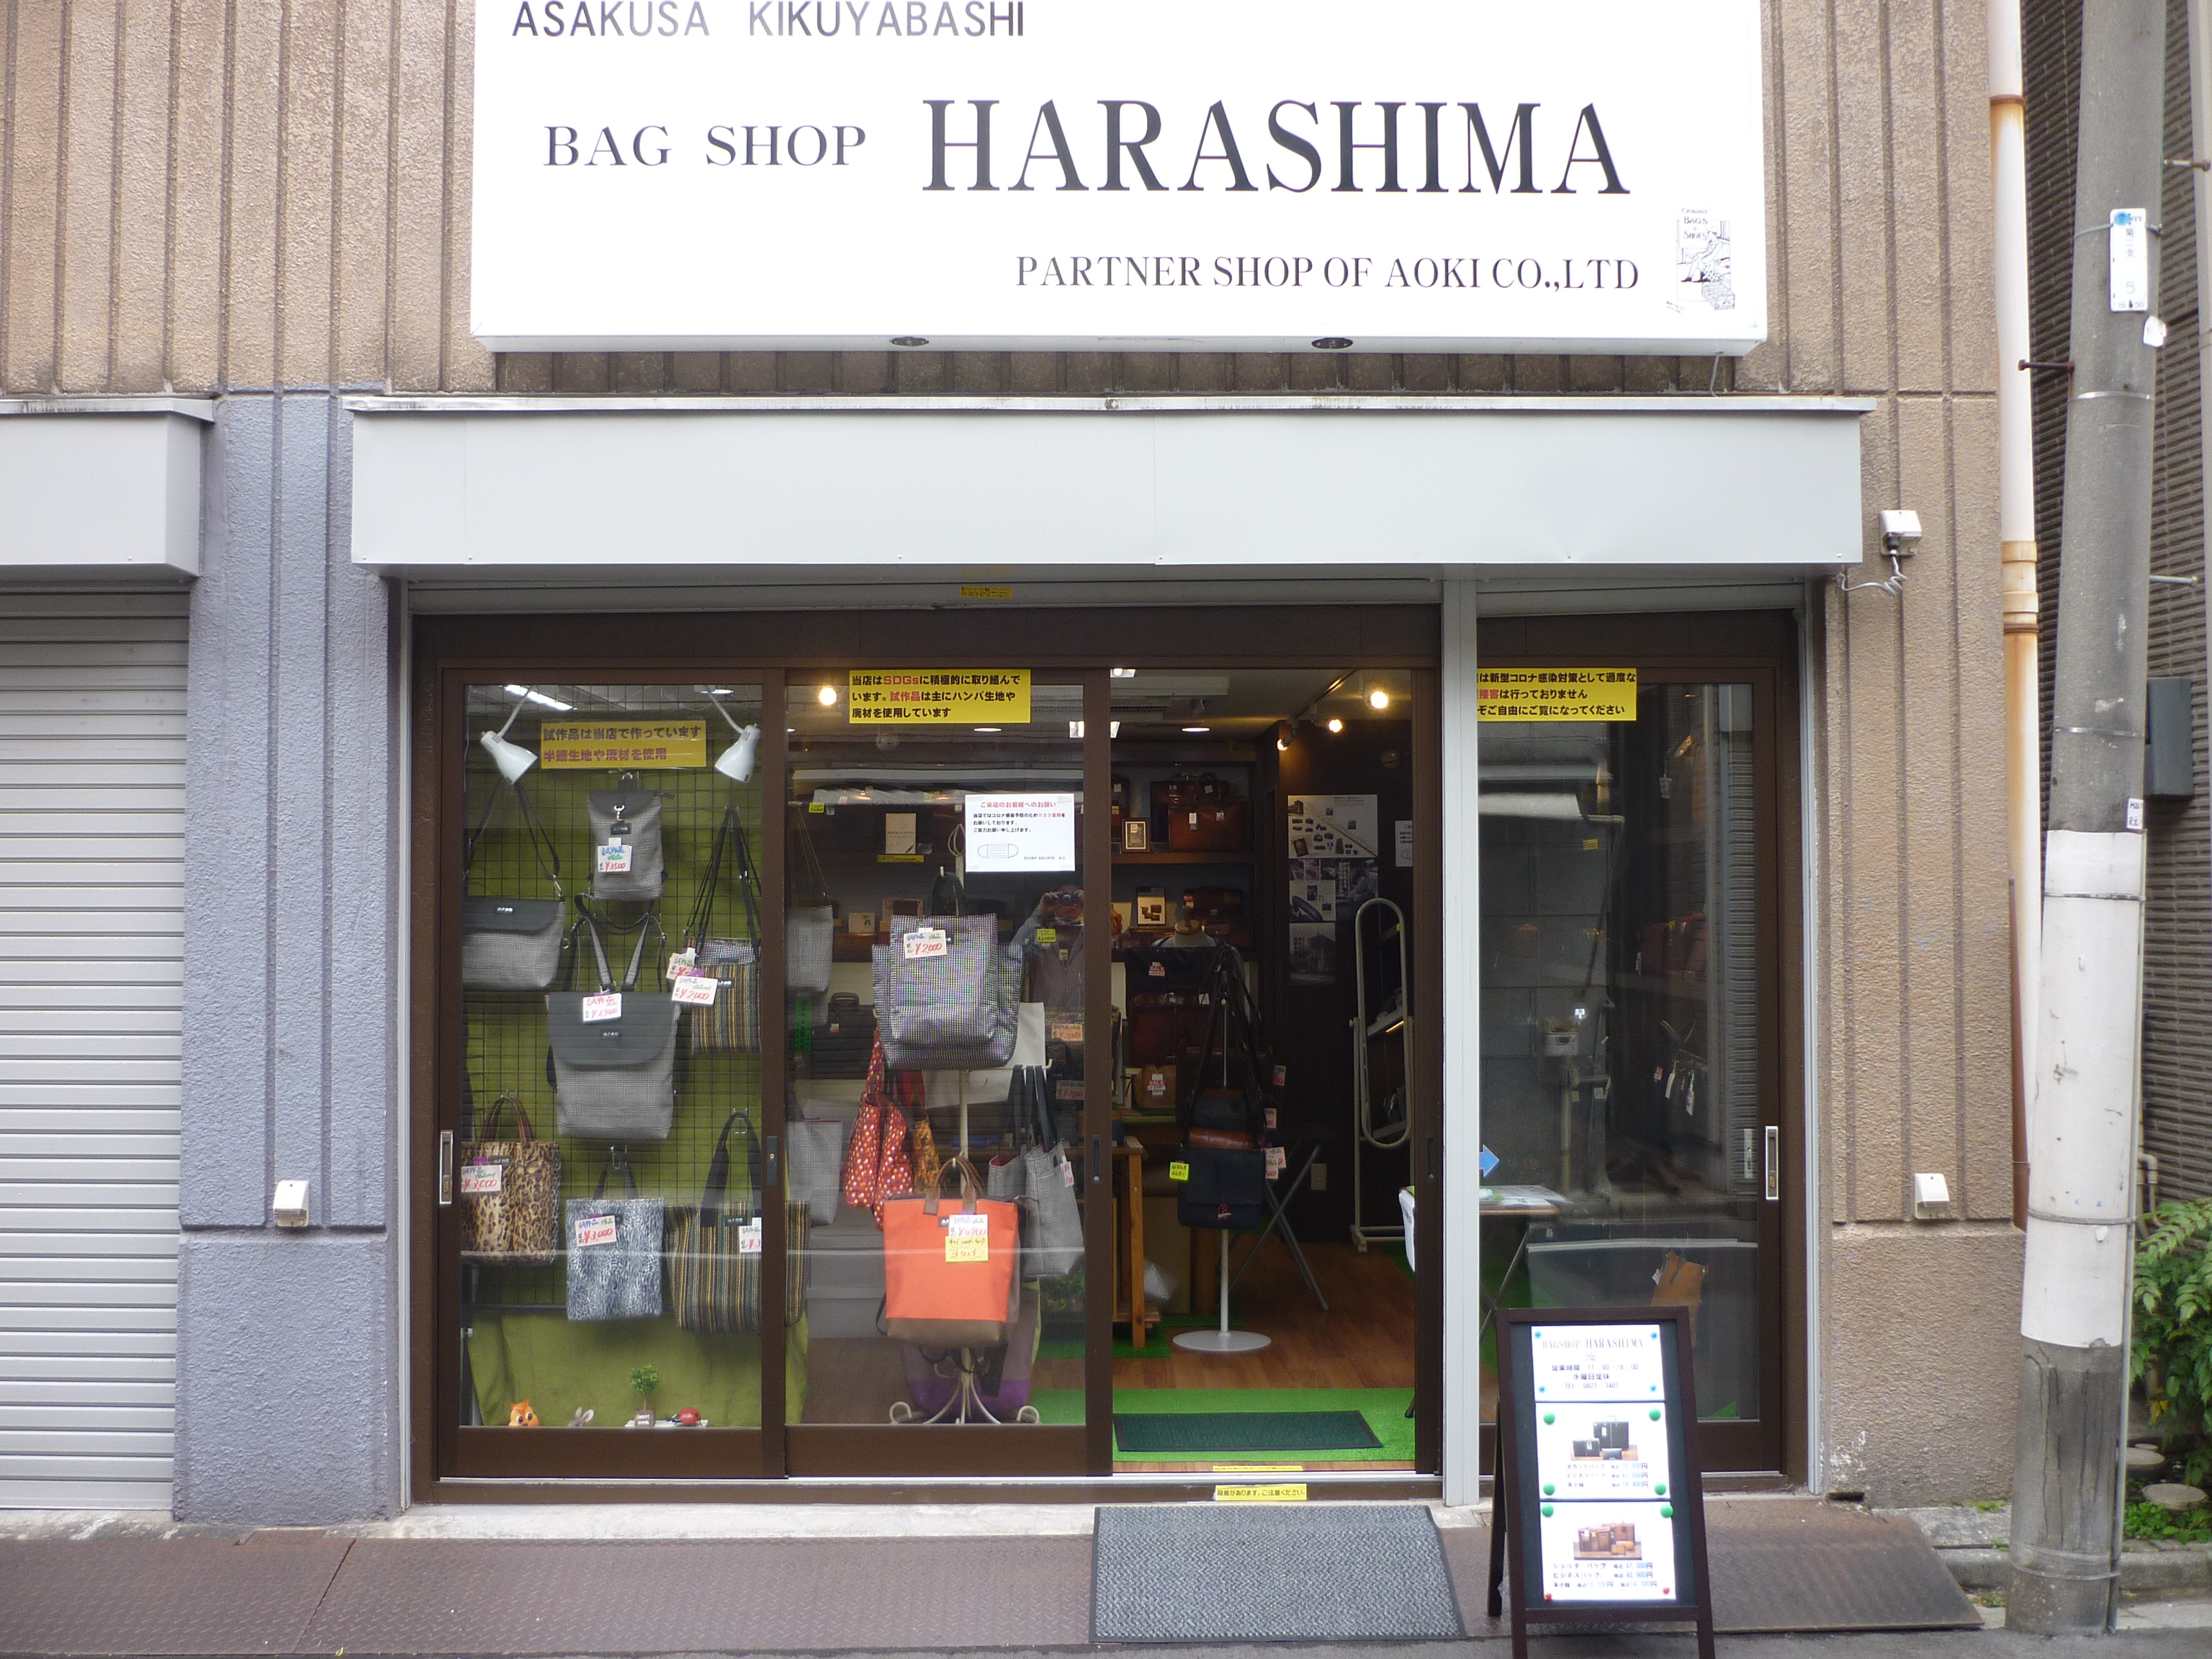 BAGSHOP HARASHIMA